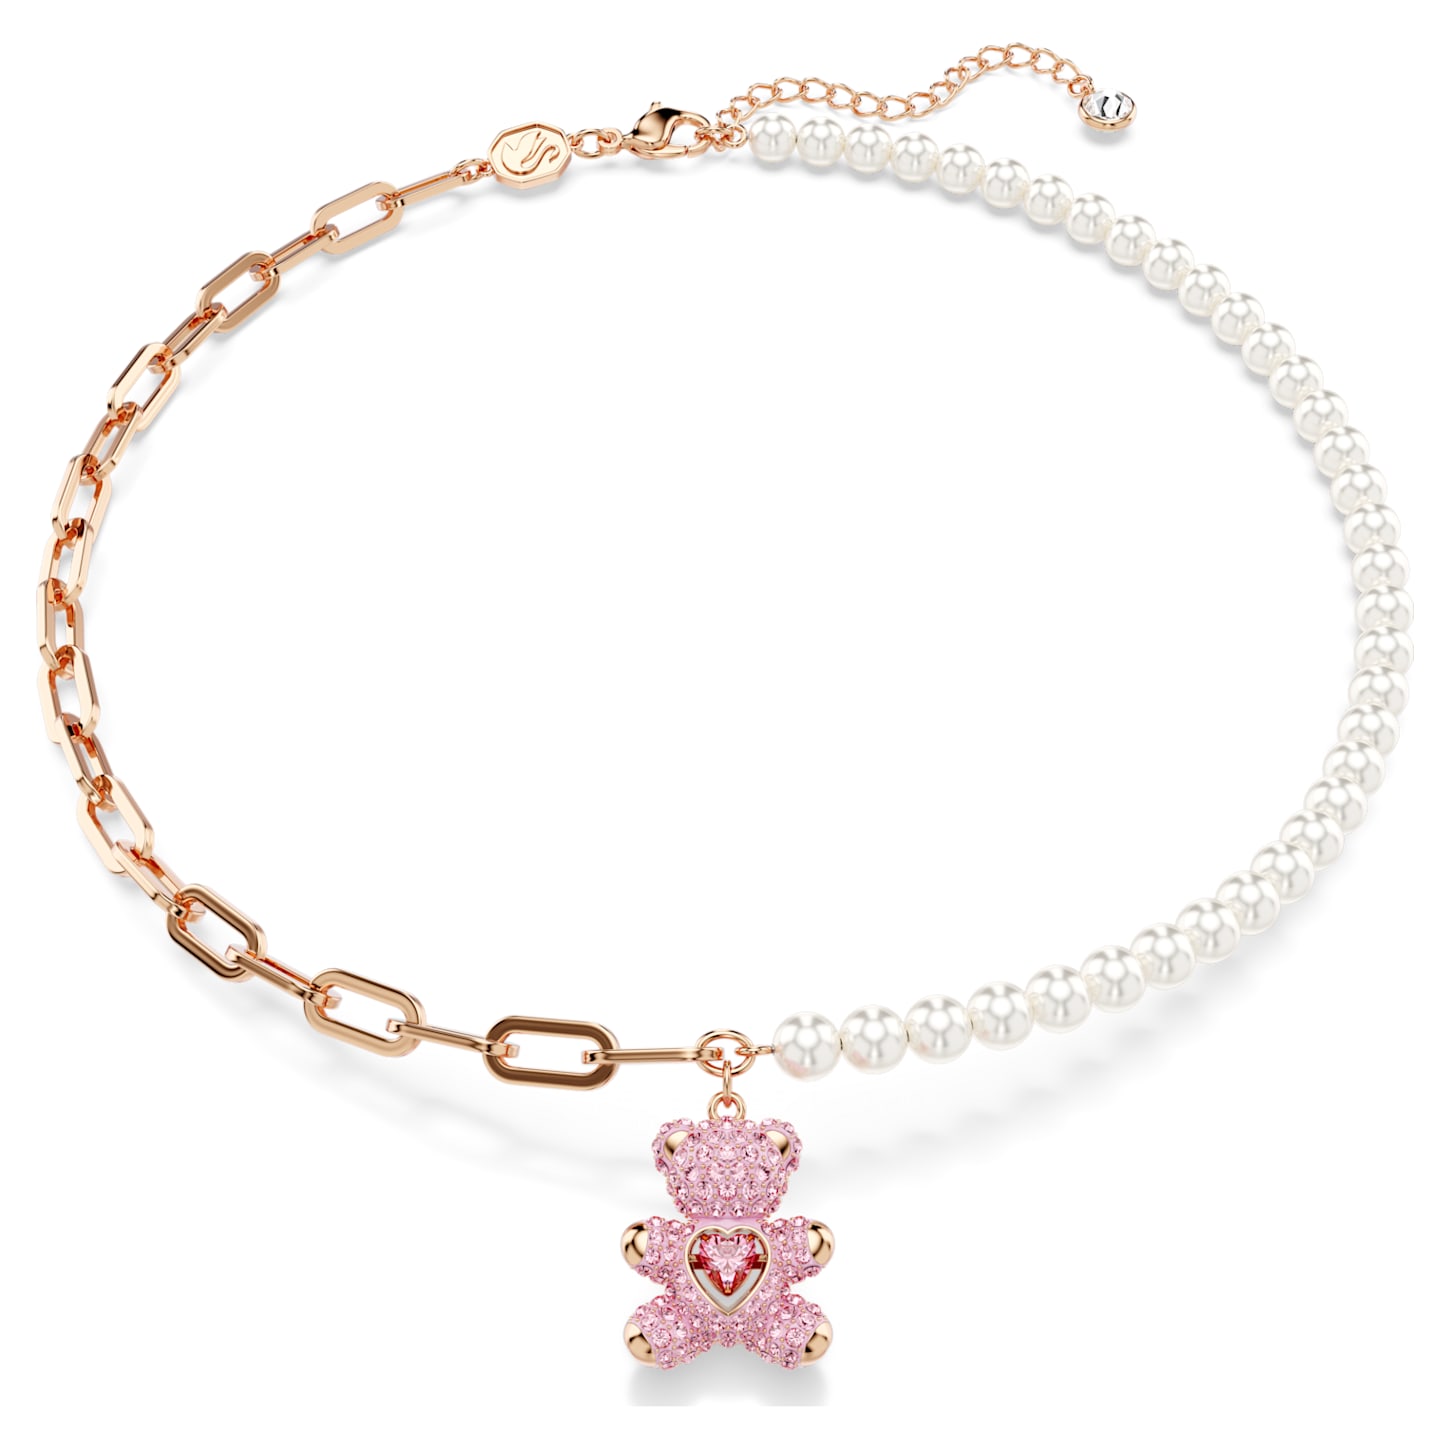 Teddy pendant, Bear, Pink, Rose gold-tone plated | Swarovski